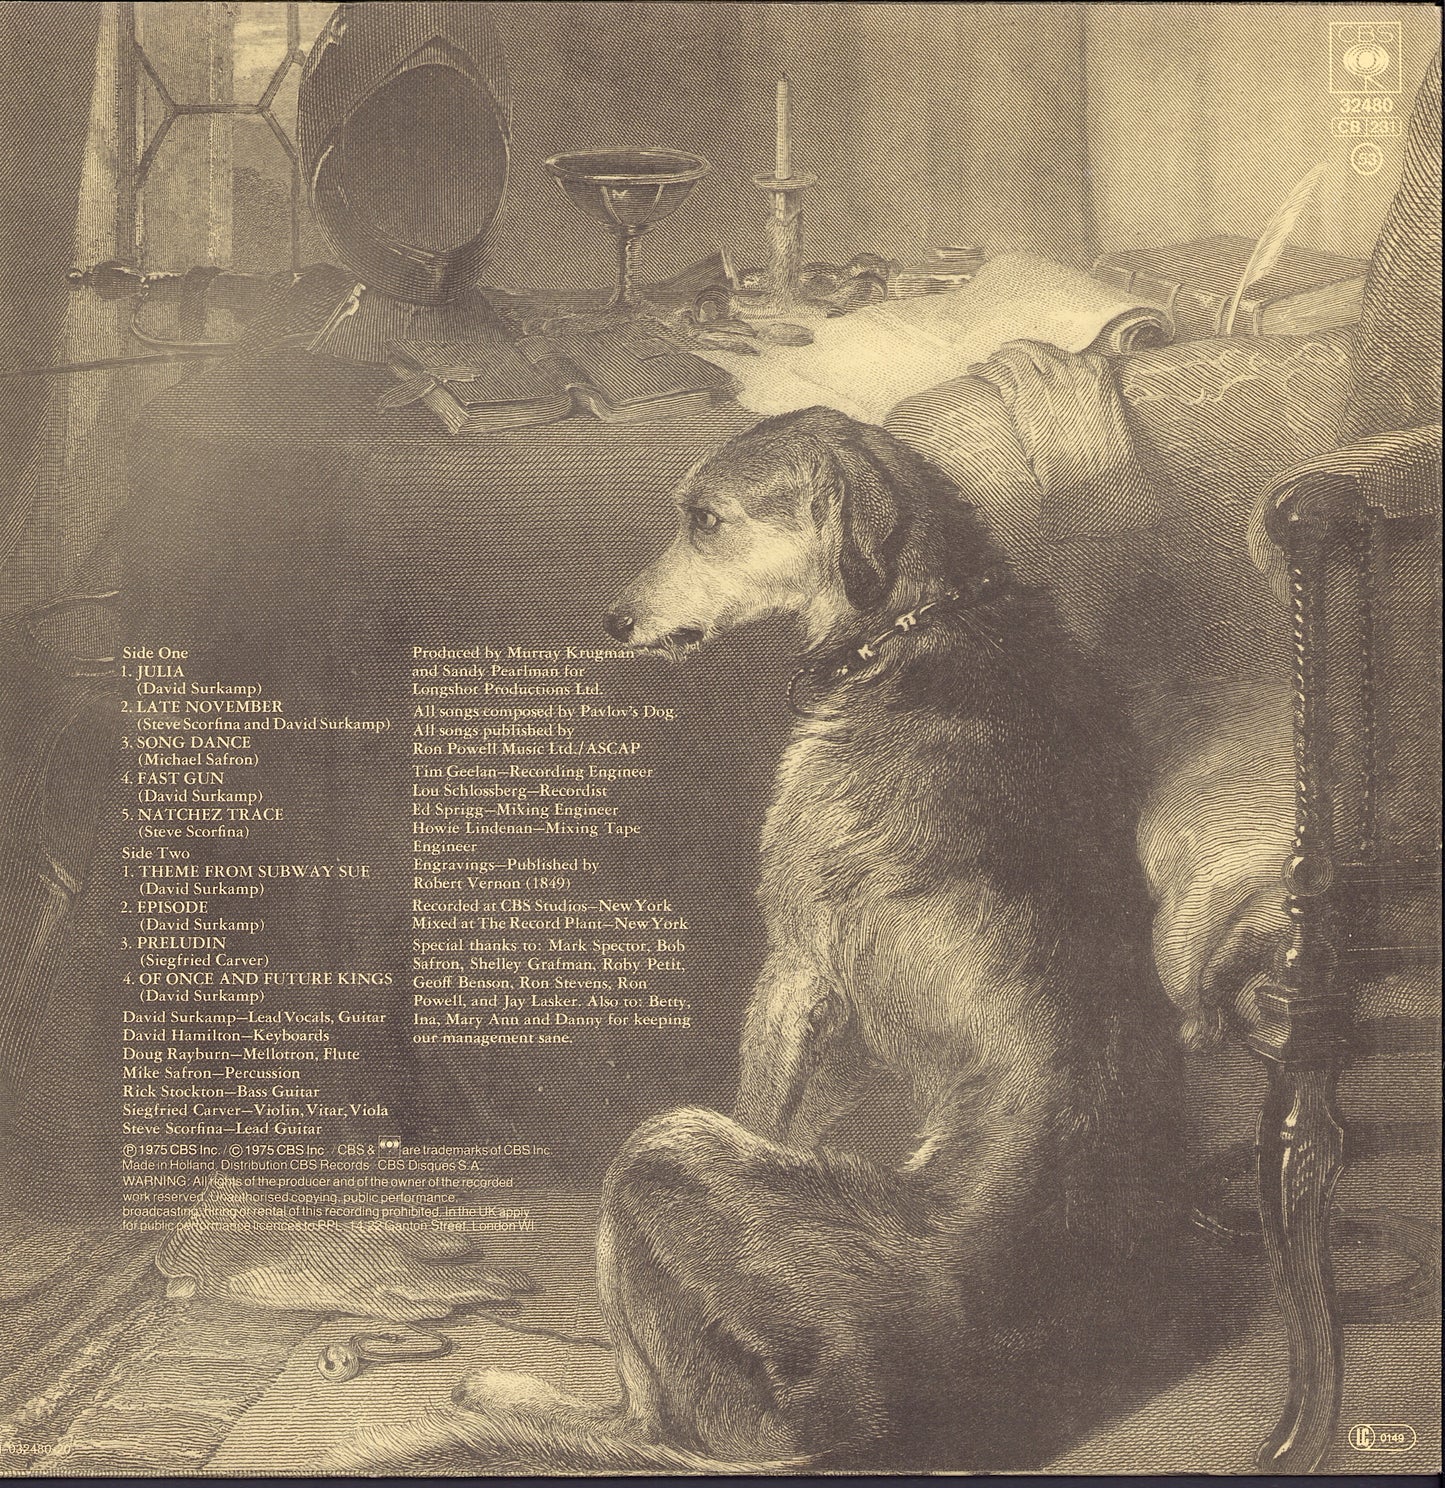 Pavlov's Dog ‎- Pampered Menial Vinyl LP